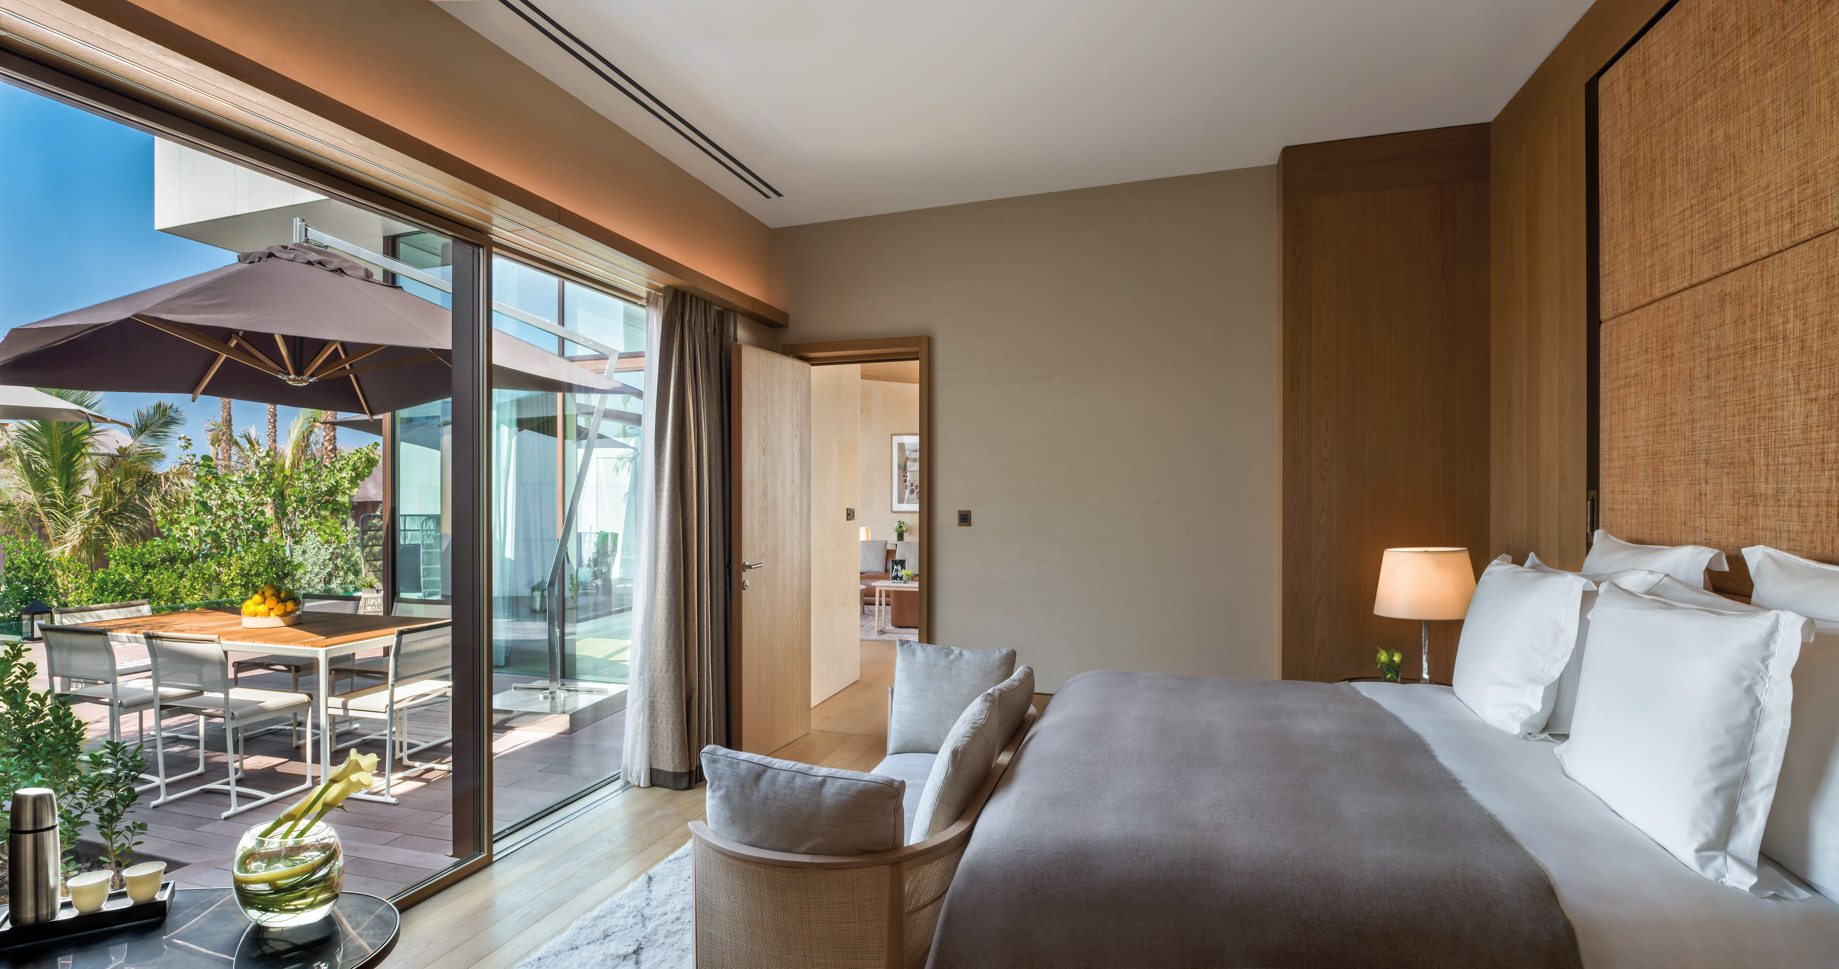 Bvlgari Resort Dubai – Jumeira Bay Island, Dubai, UAE – Beach Villa Master Bedroom